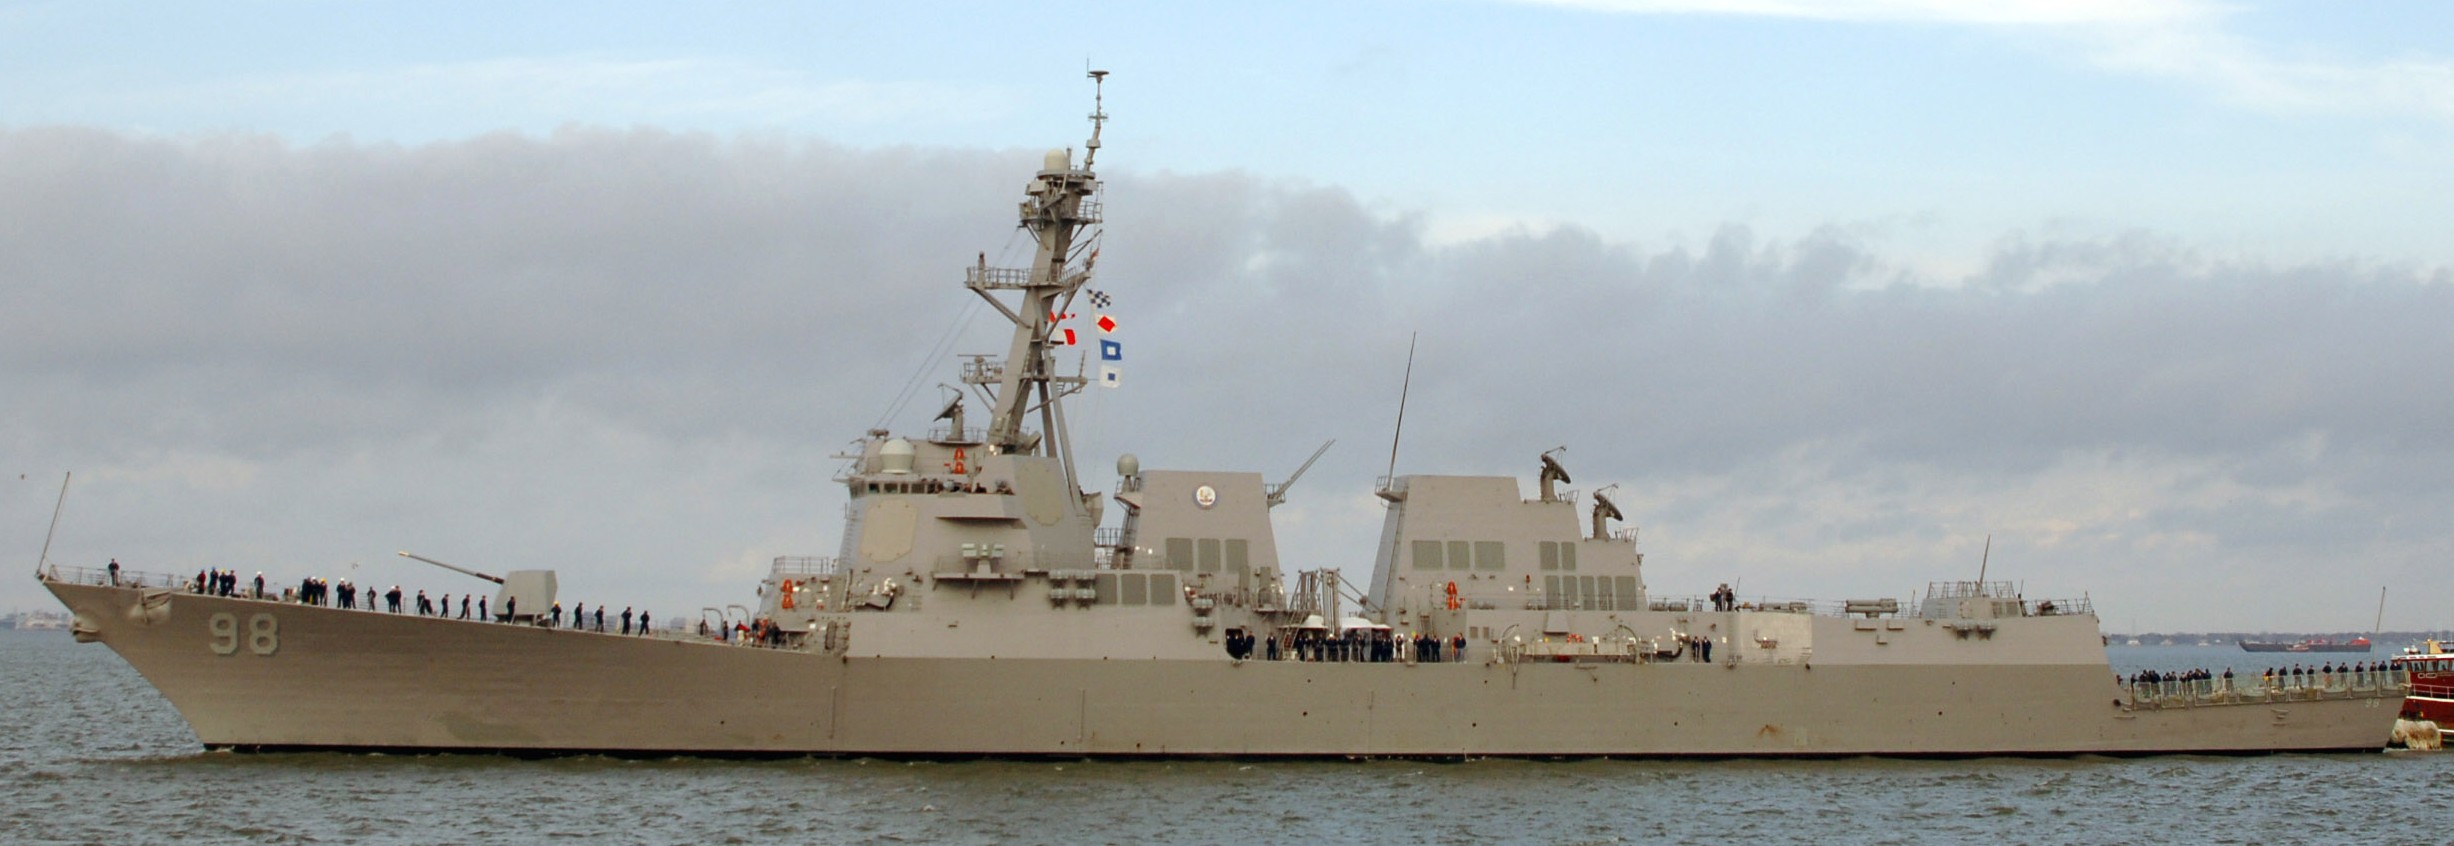 ddg-98 uss forrest sherman arleigh burke class guided missile destroyer aegis us navy 06